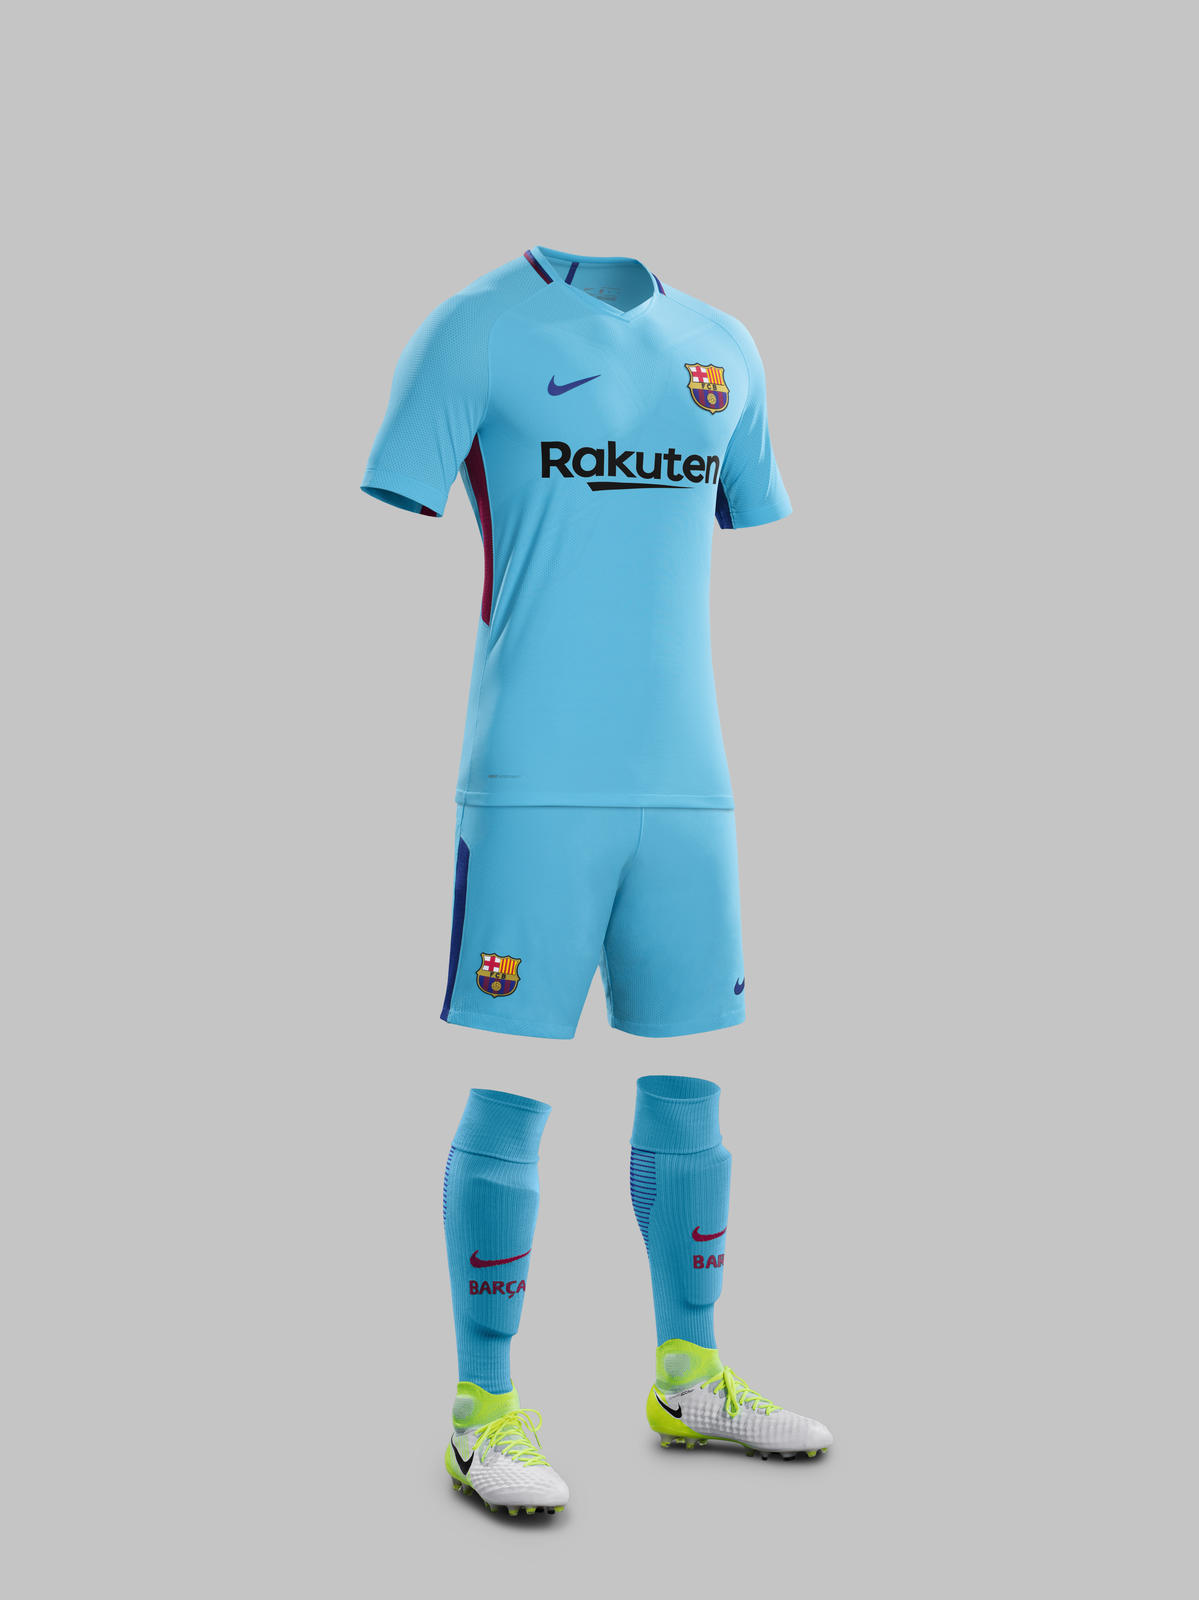 Barcelona Nike Away Kit Kits Football